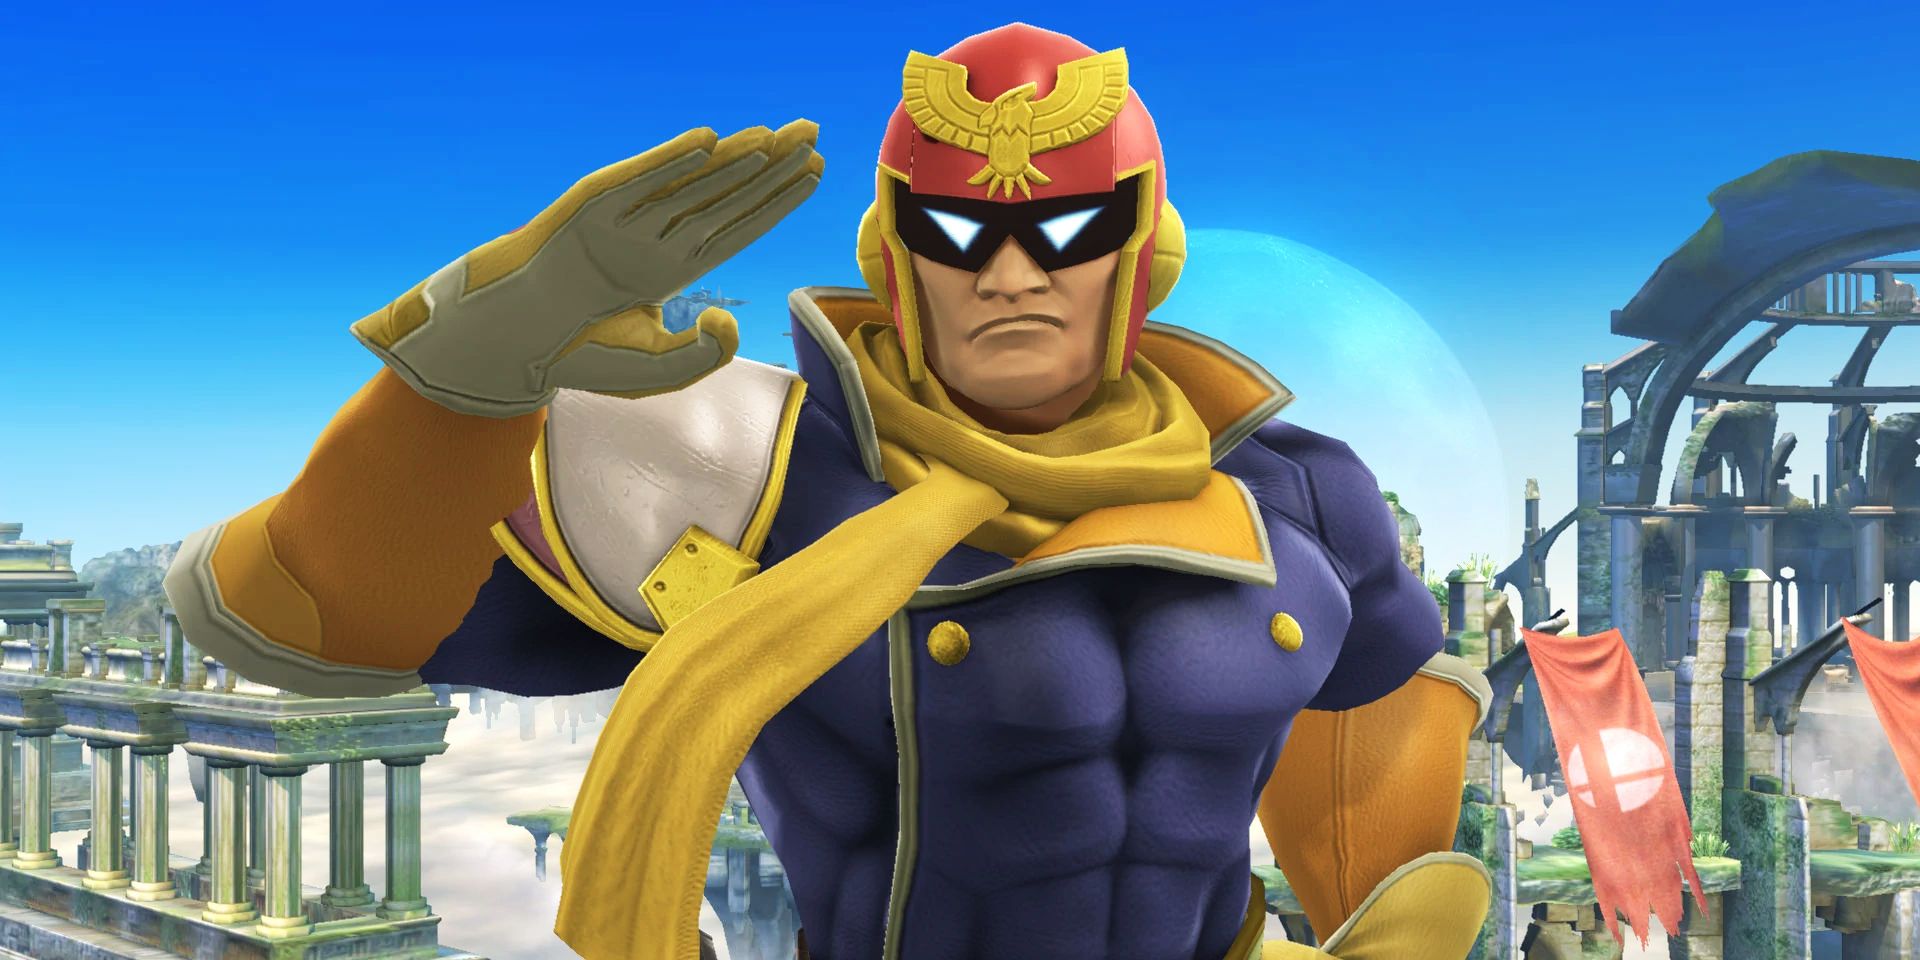 Captain Falcon saluting the viewer in Super Smash Bros